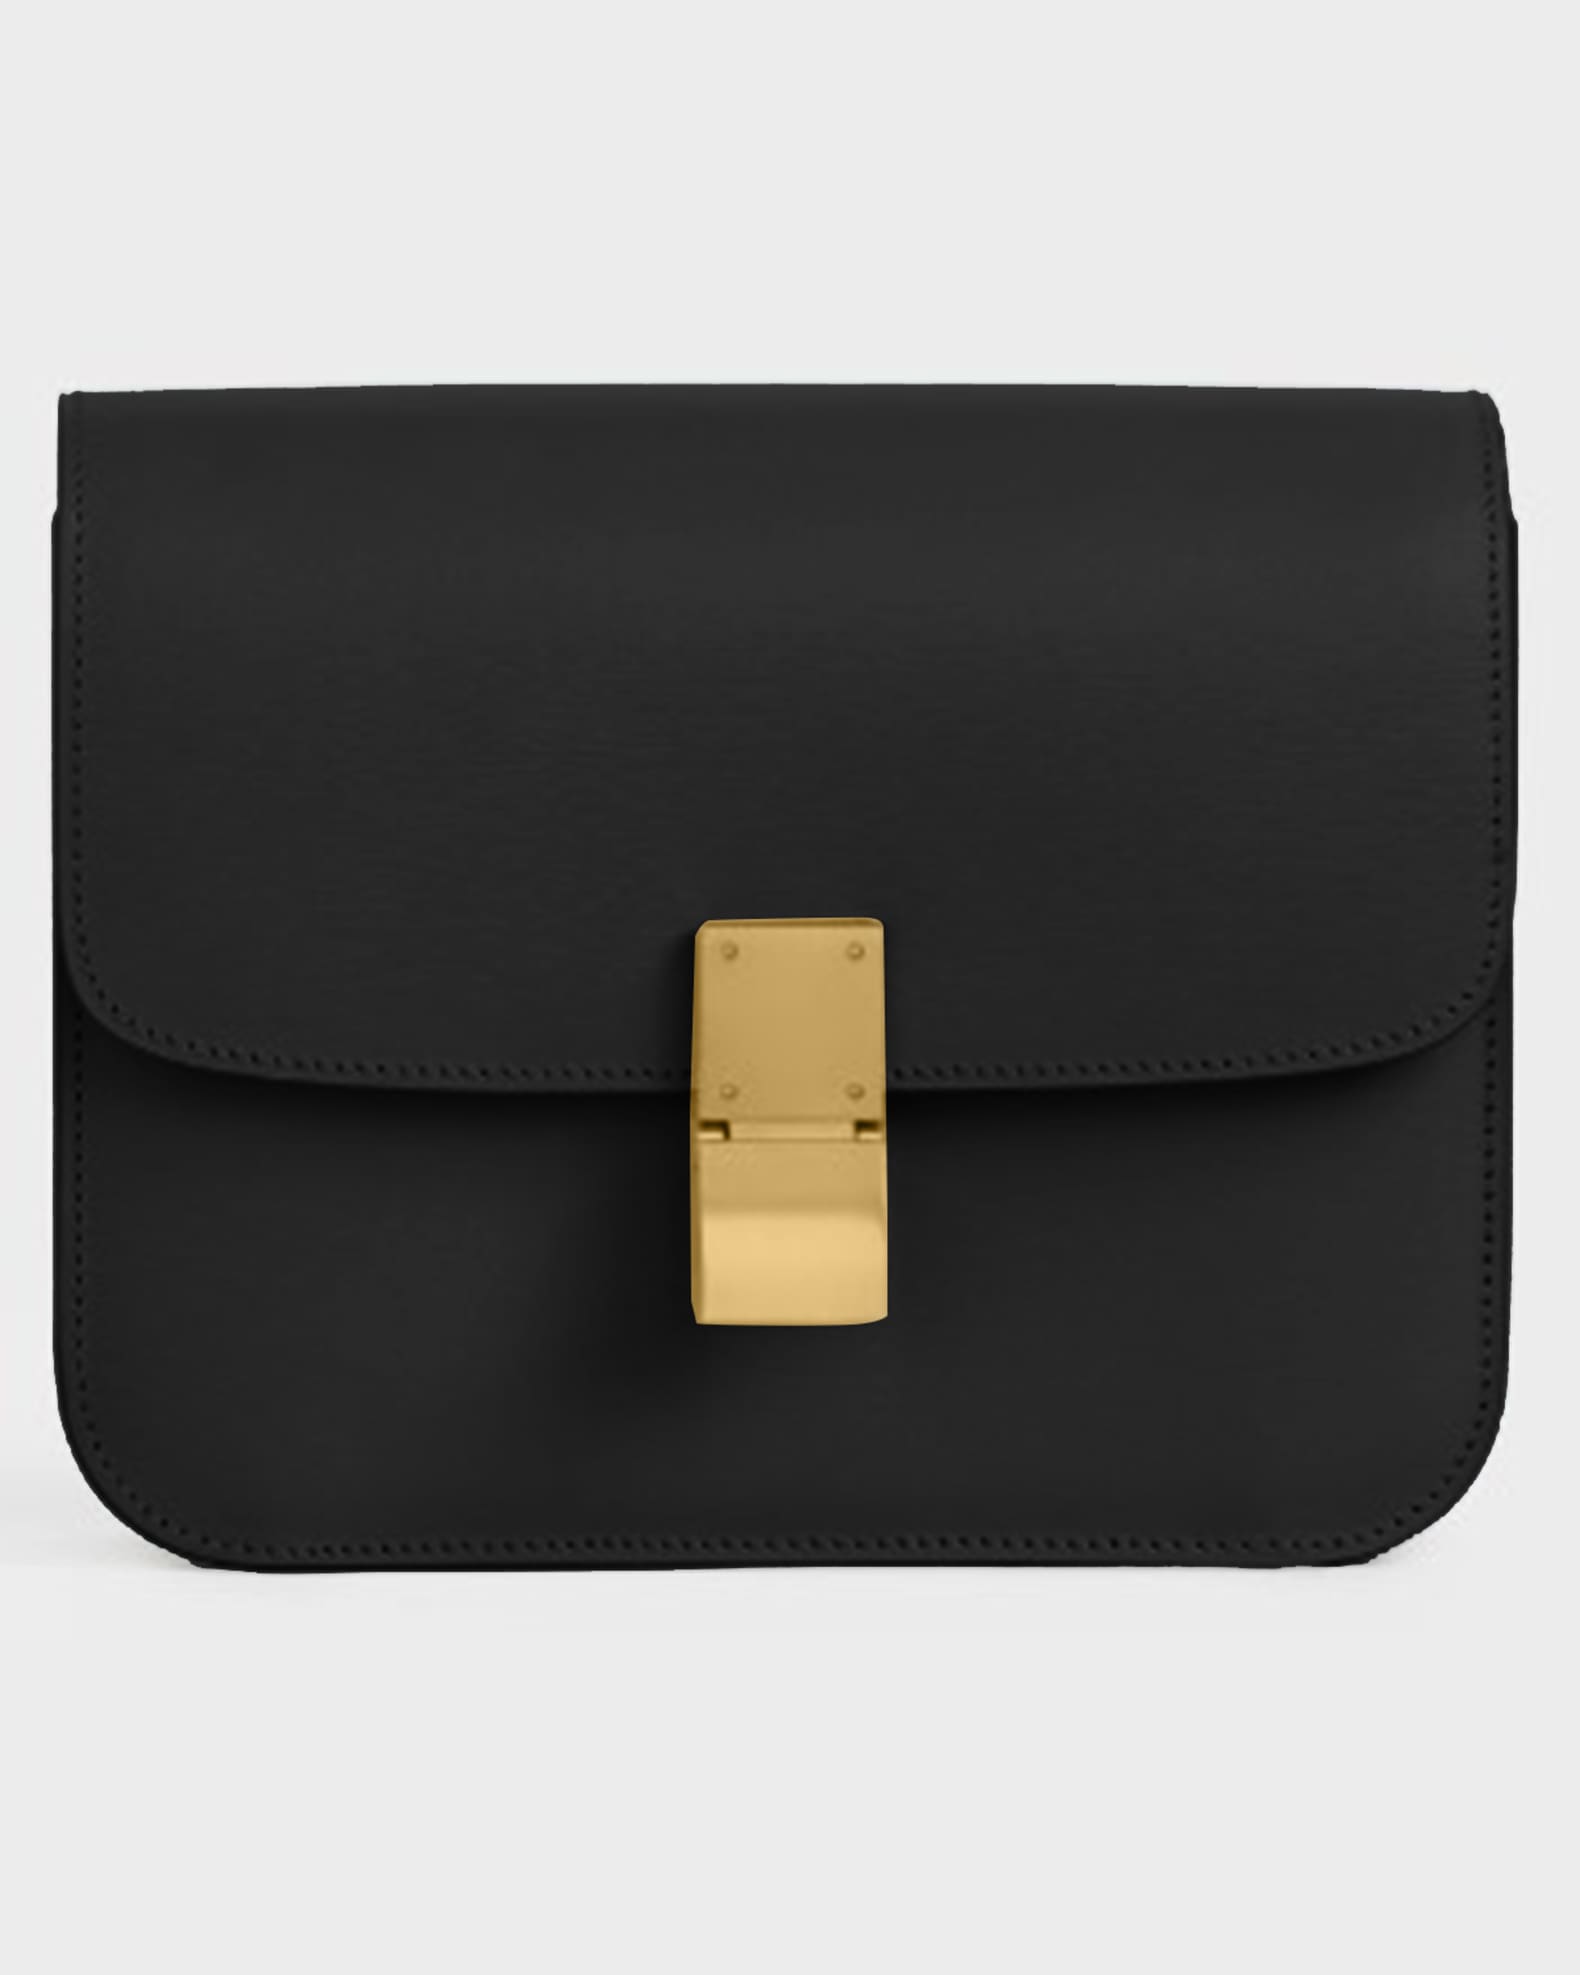 Neiman Marcus Celine Box Bag Sale Online | website.jkuat.ac.ke